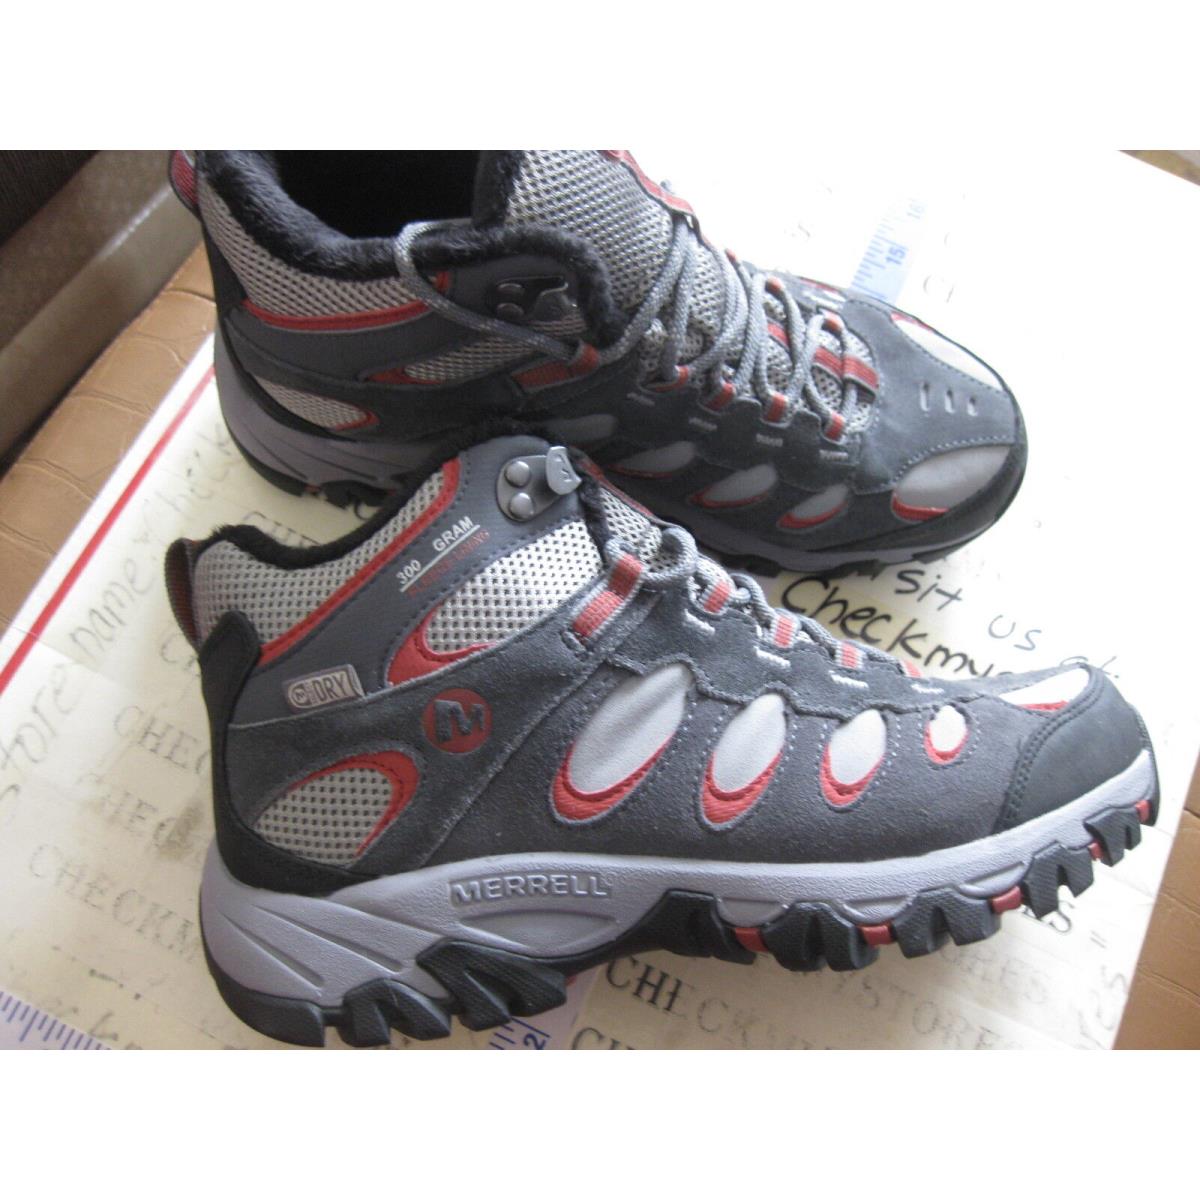 Merrell J227163C Men Ridgepass Thermo Mid Waterproof Boots Hiking Shoes CASTLE ROCK/RED OCHRE